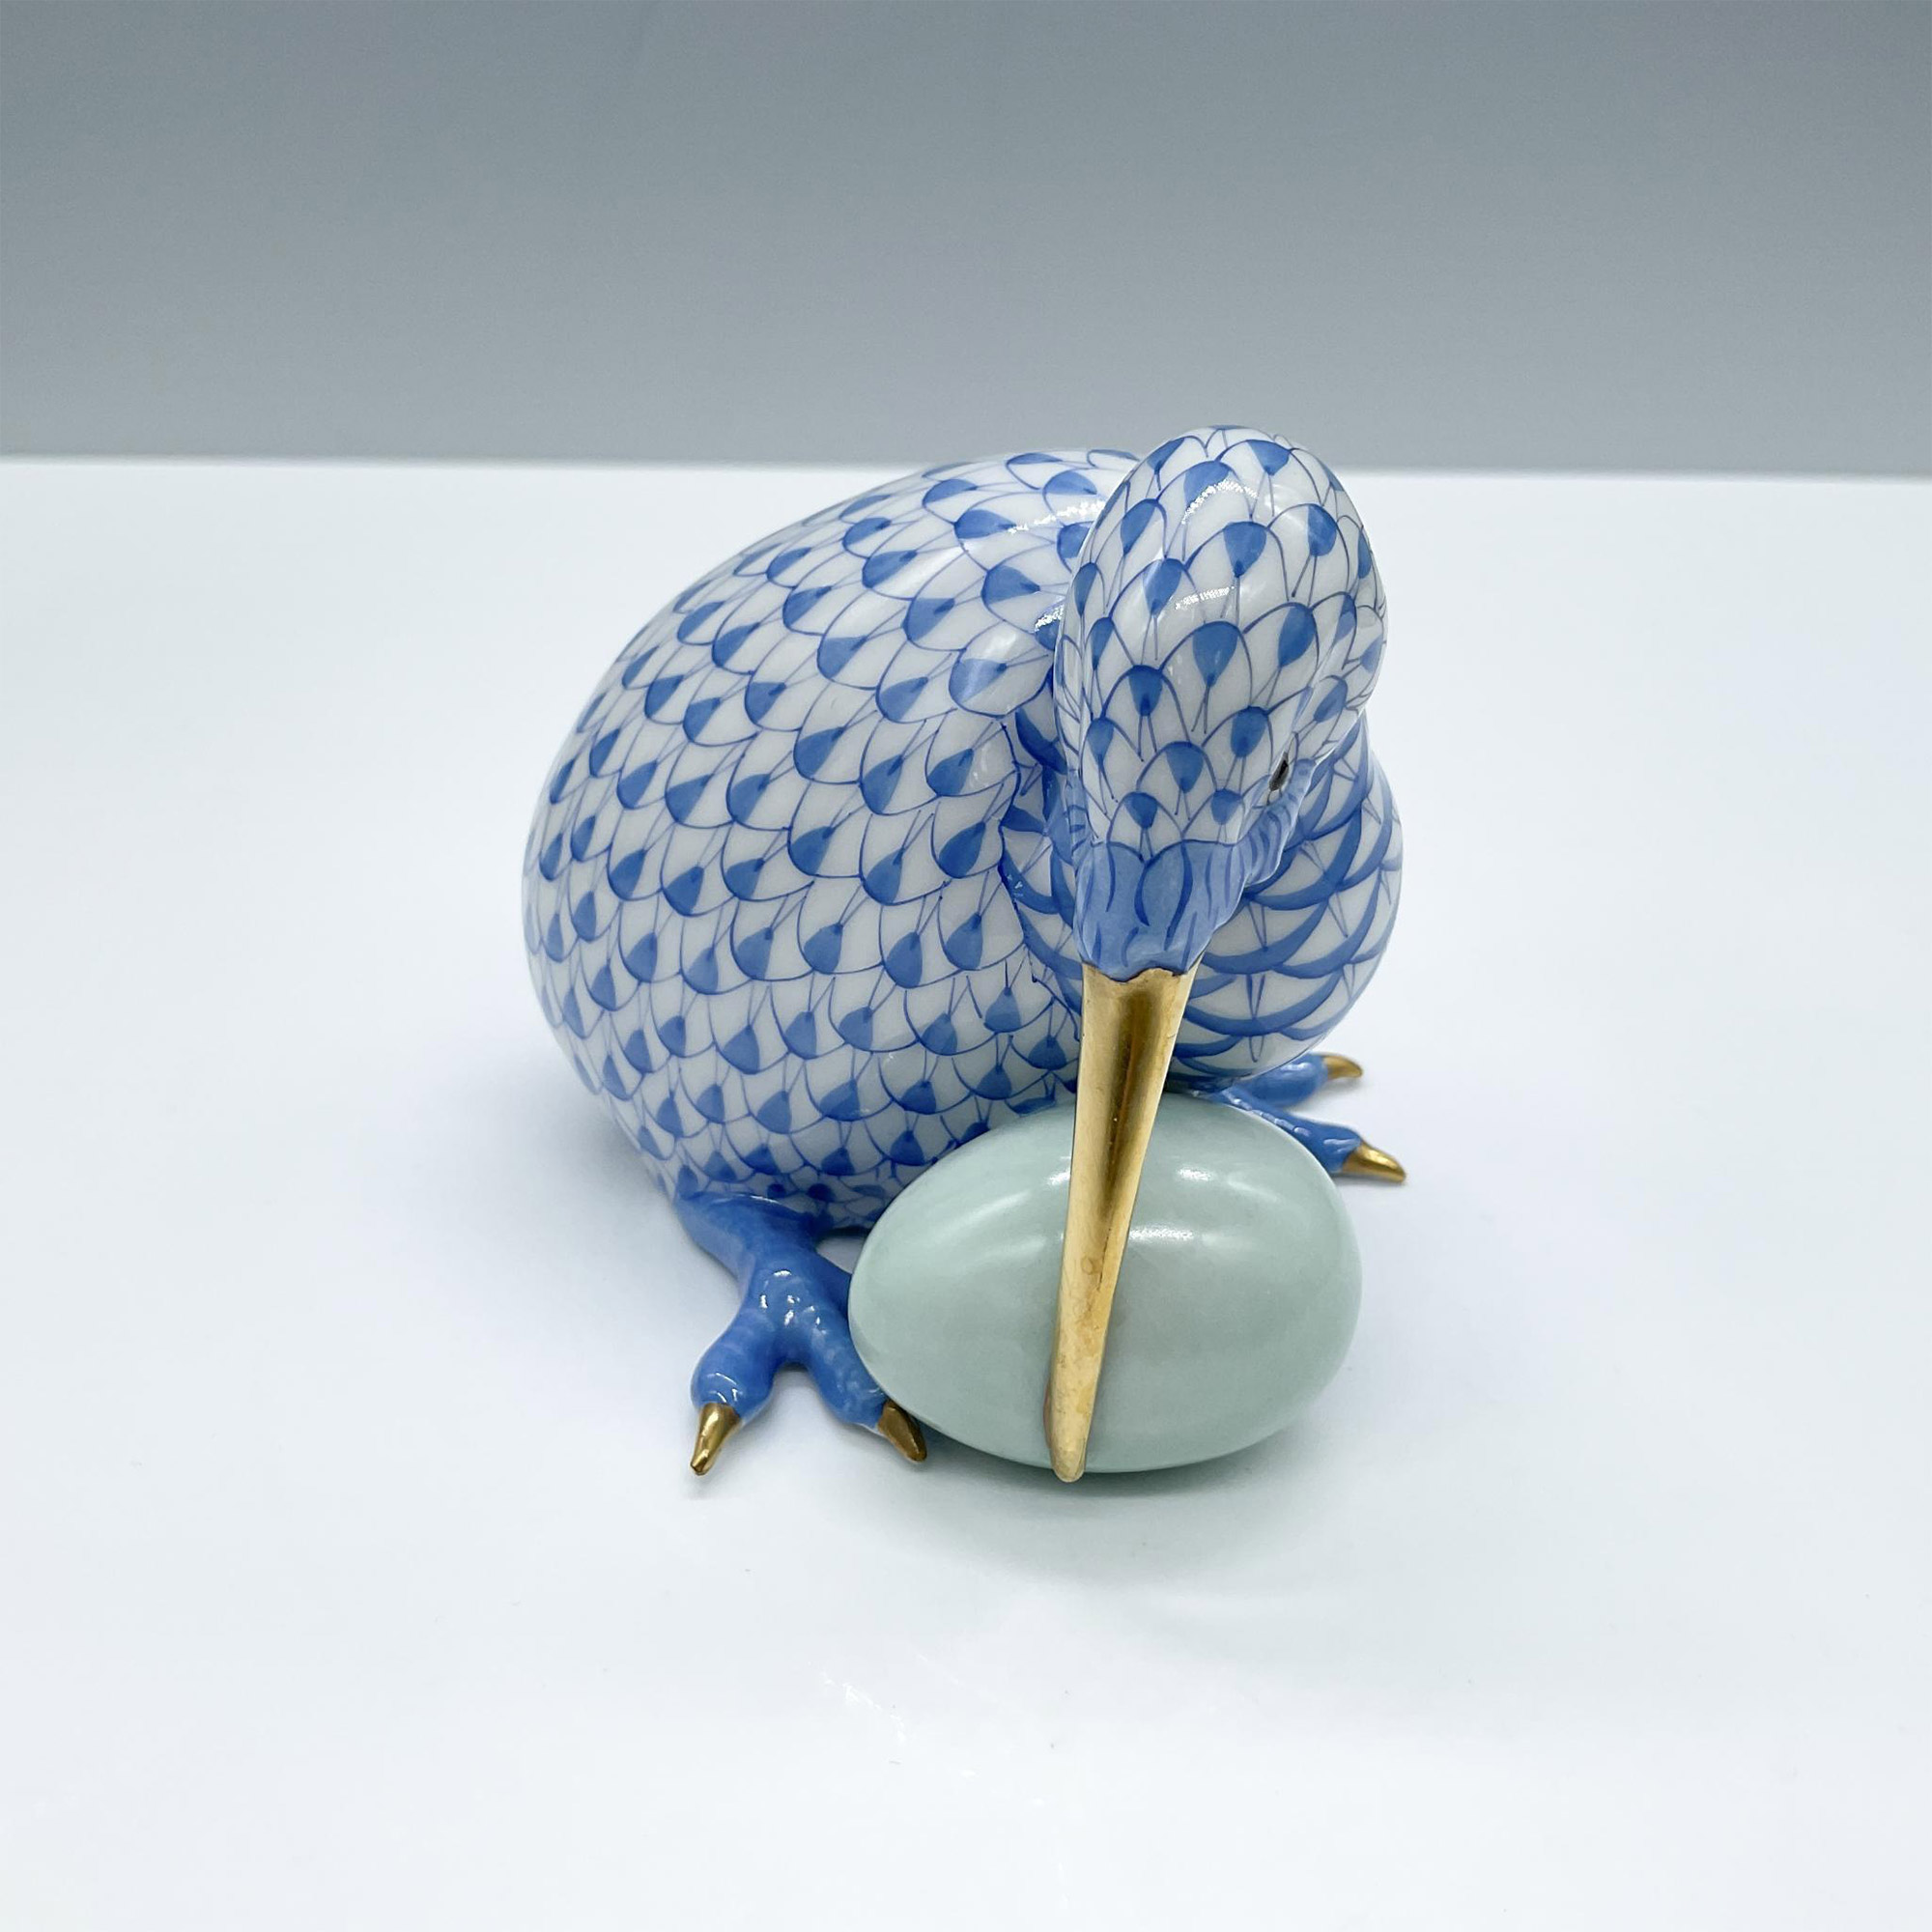 Herend Figurine, Kiwi Bird with Egg